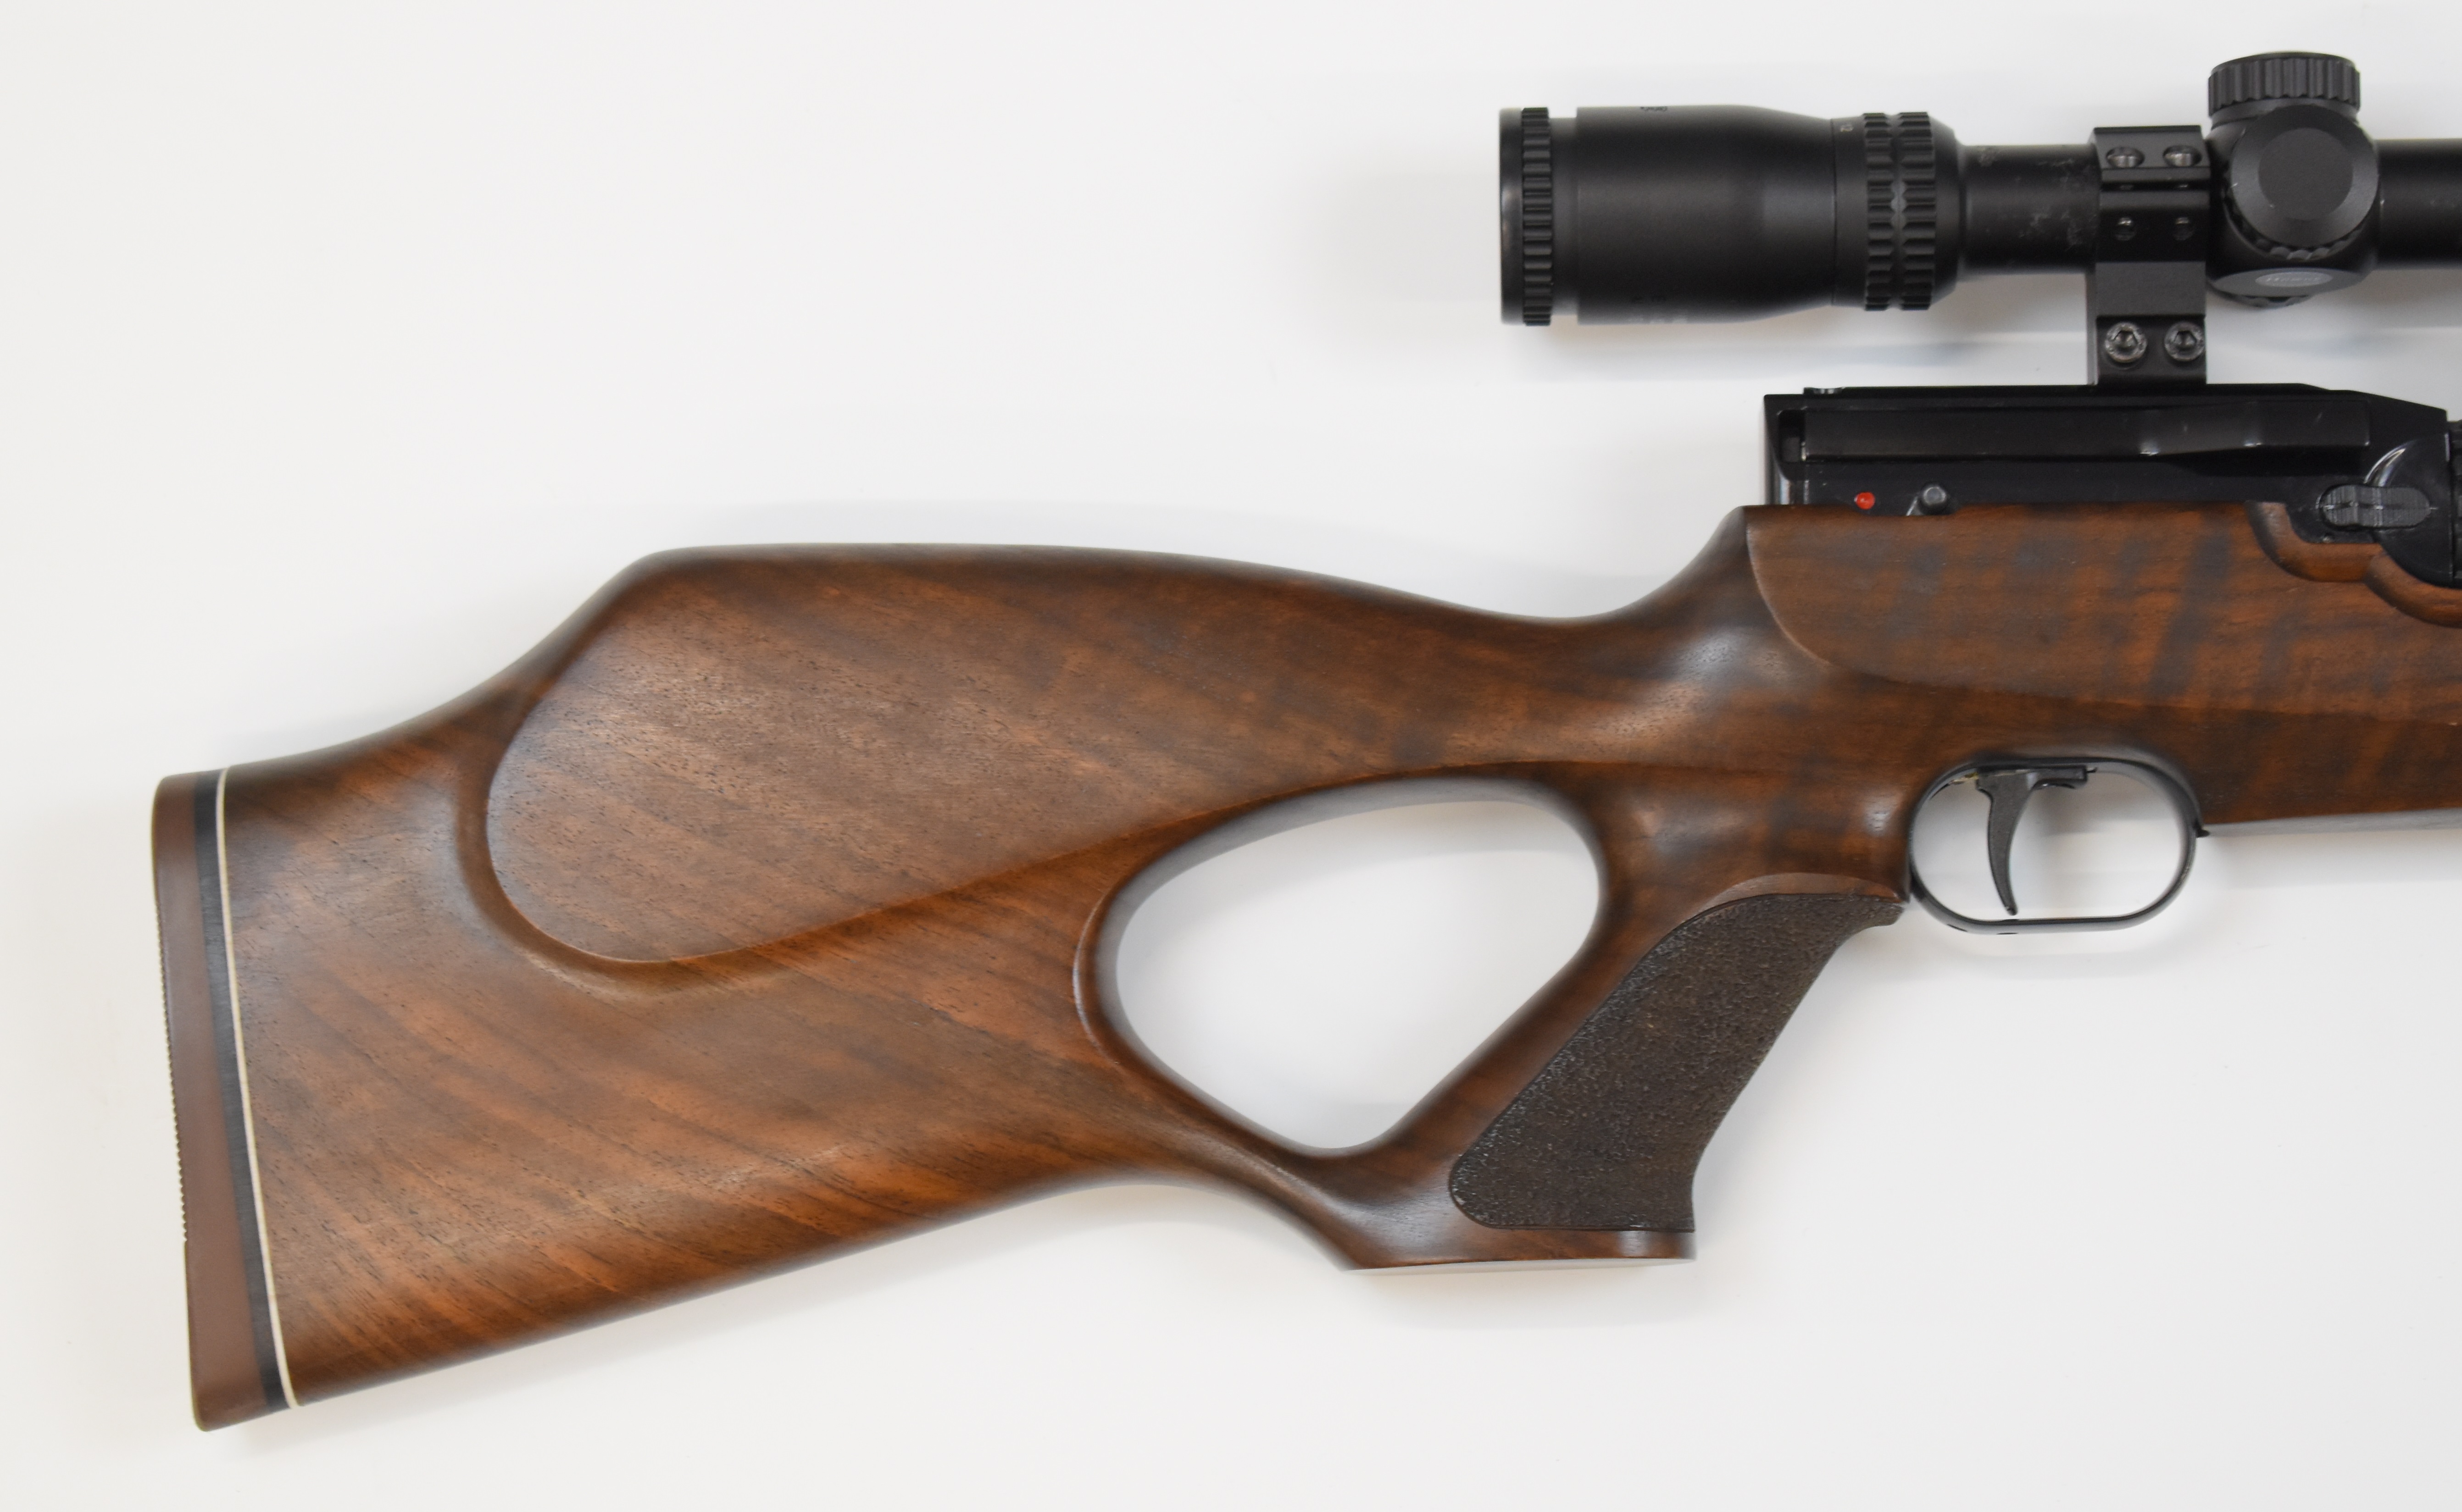 Weihrauch HW100 .177 PCP air rifle with textured semi-pistol grip, raised cheek piece, adjustable - Image 3 of 10